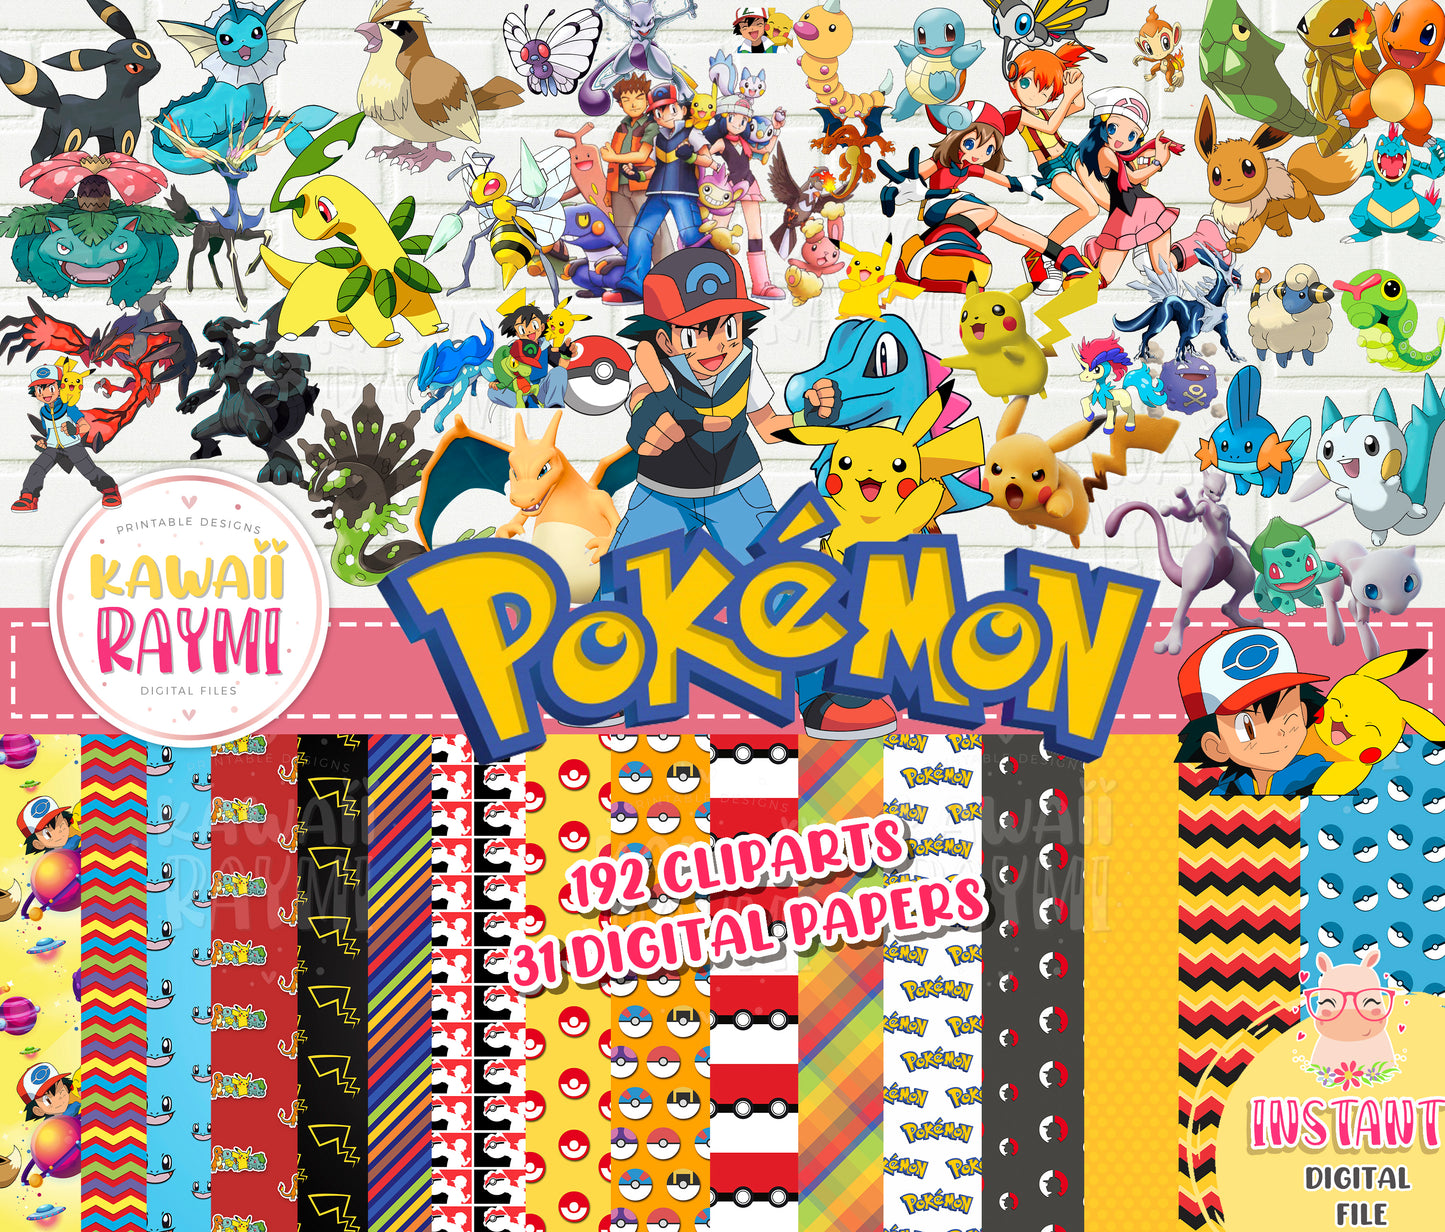 Pokemon cliparts, digital papers pokemon anime cliparts, pikachu png, ash pokemon png, cliparts instant download